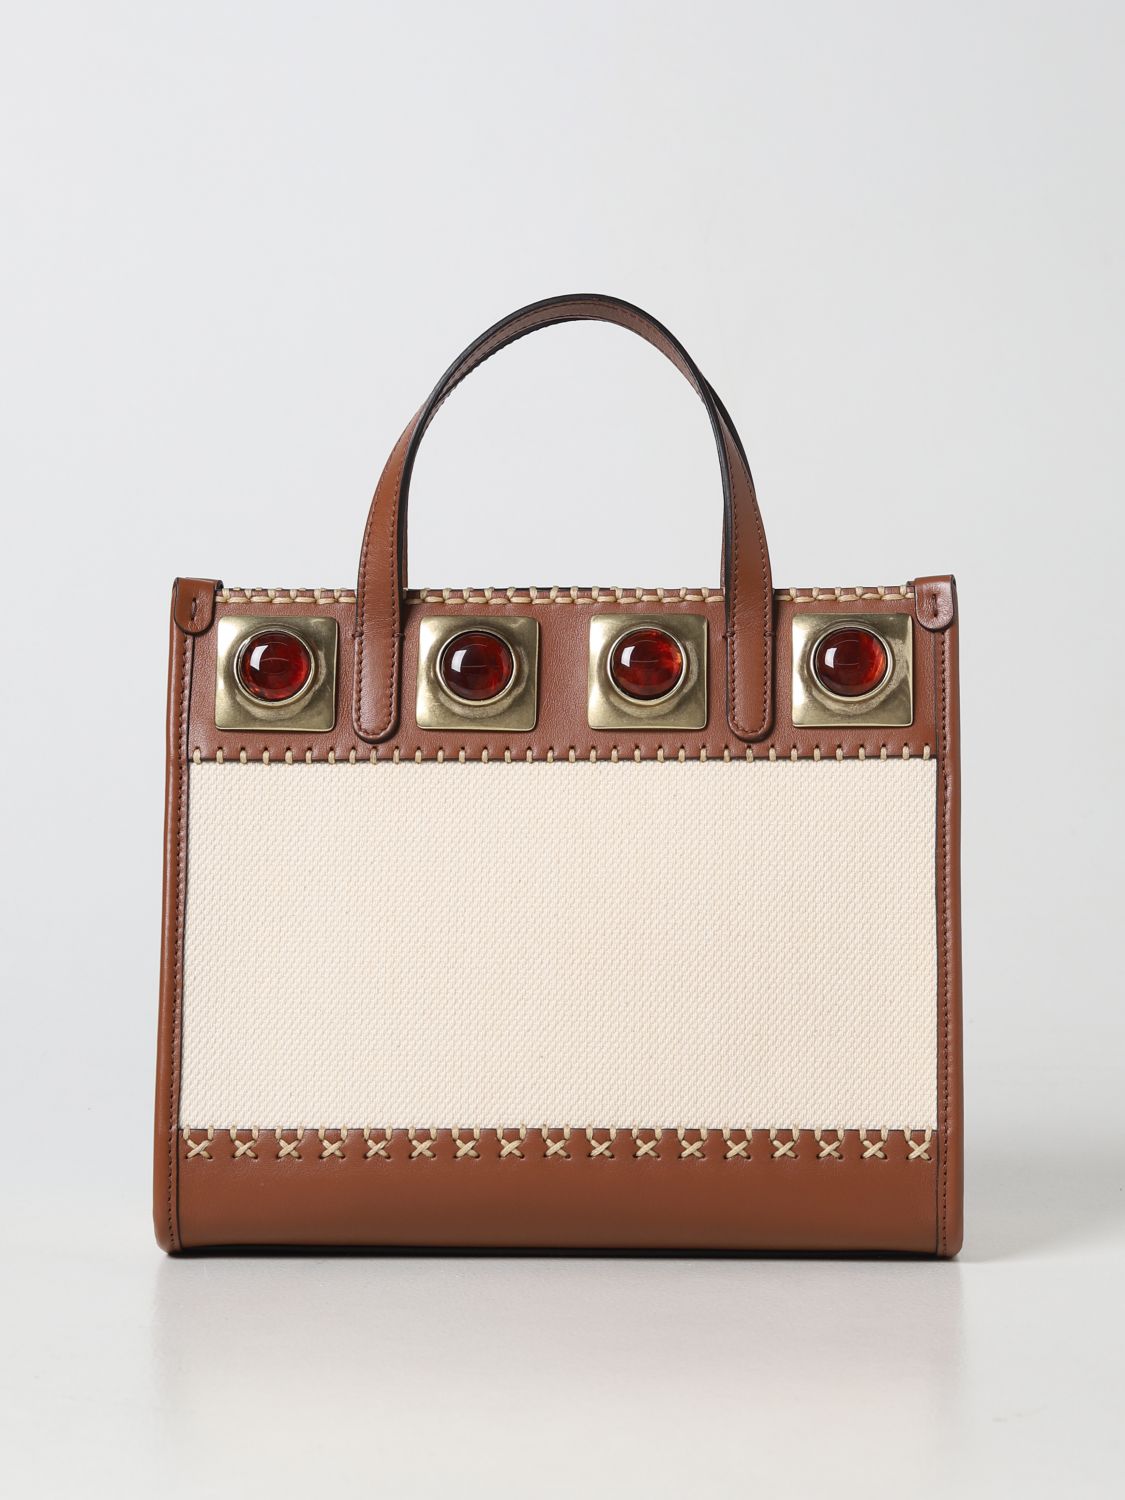 ETRO Bags & Handbags for Women for sale